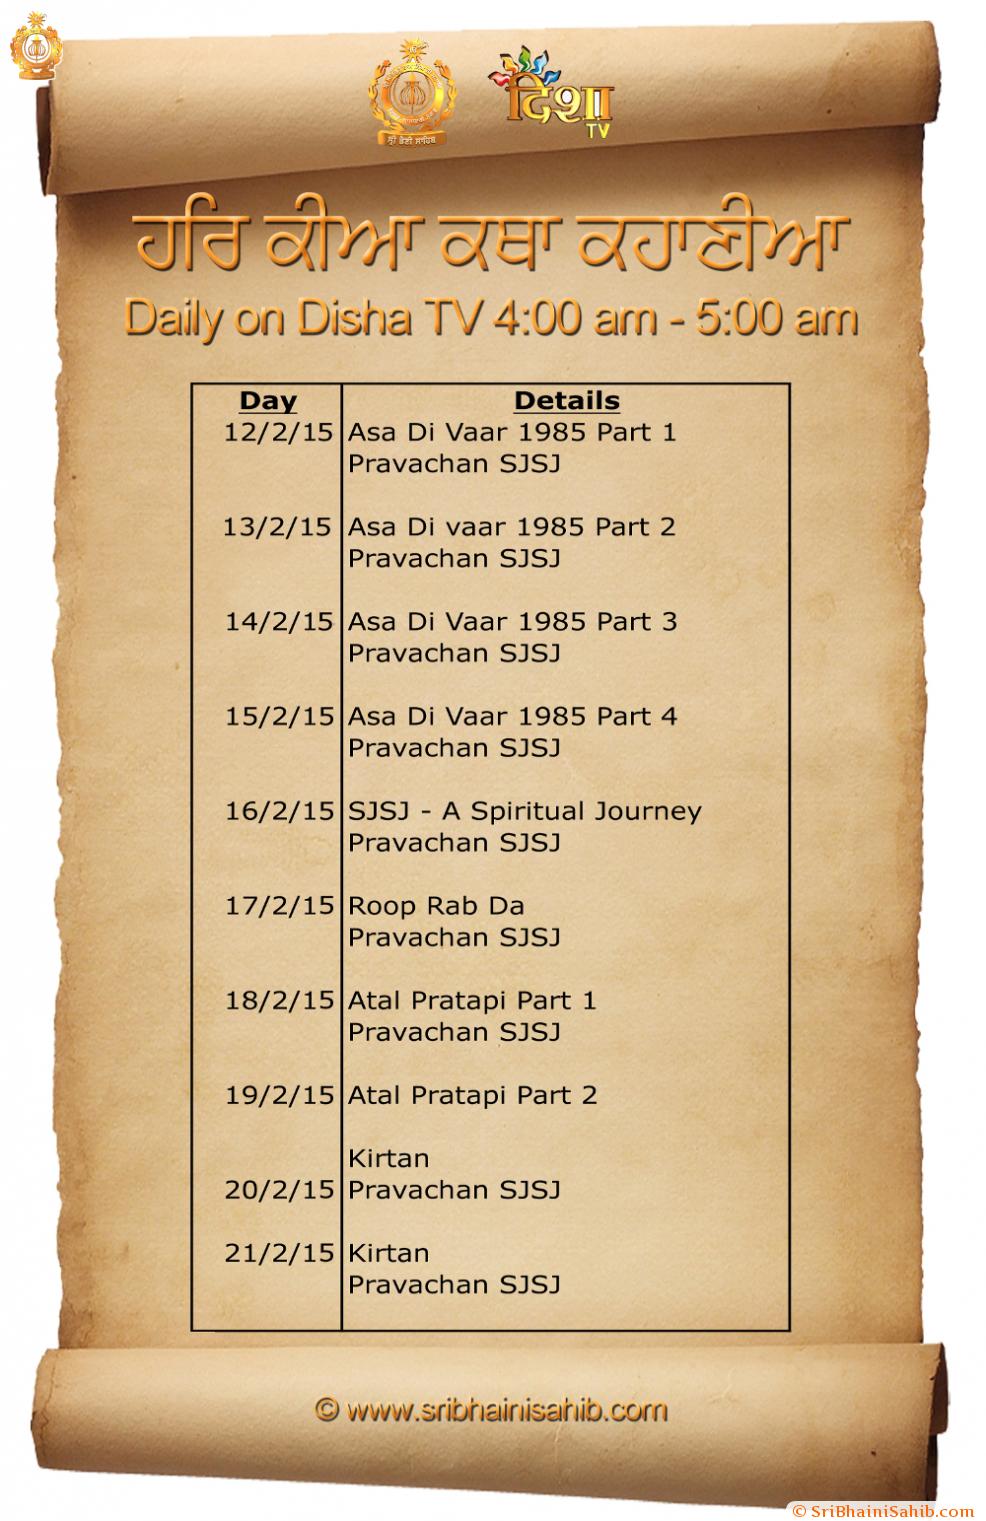 Program schedule on Disha TV 